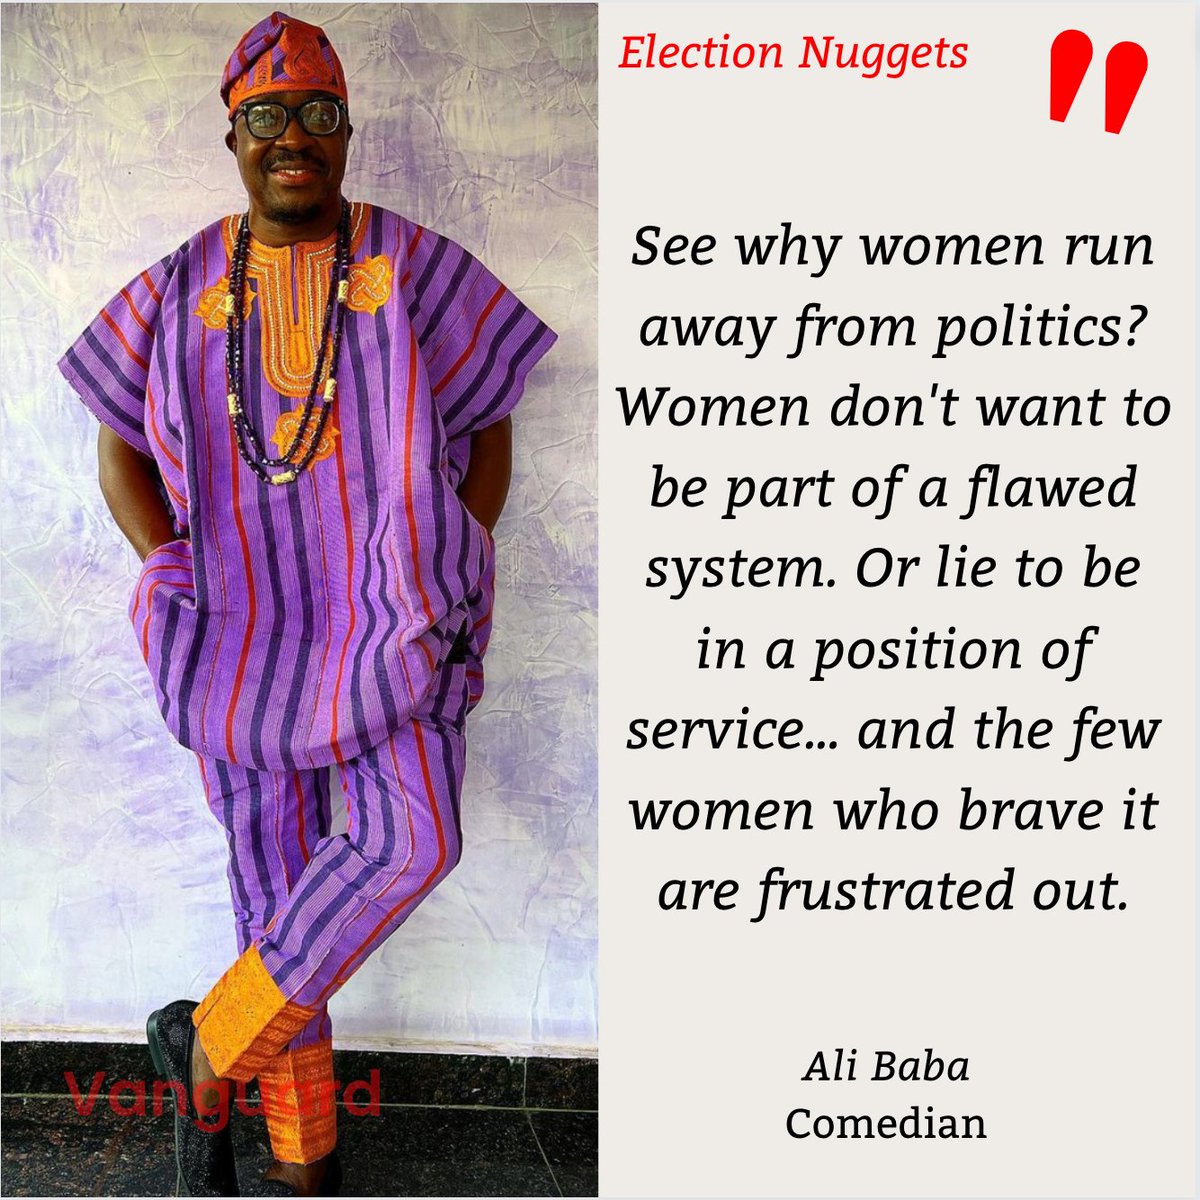 Alibaba #alibaba #contentcreator #comedian #celebriry #2023election #nigeriadecides #NigeriaDecides #presidentialelection2023 #nigeria #vanguardnewspapers